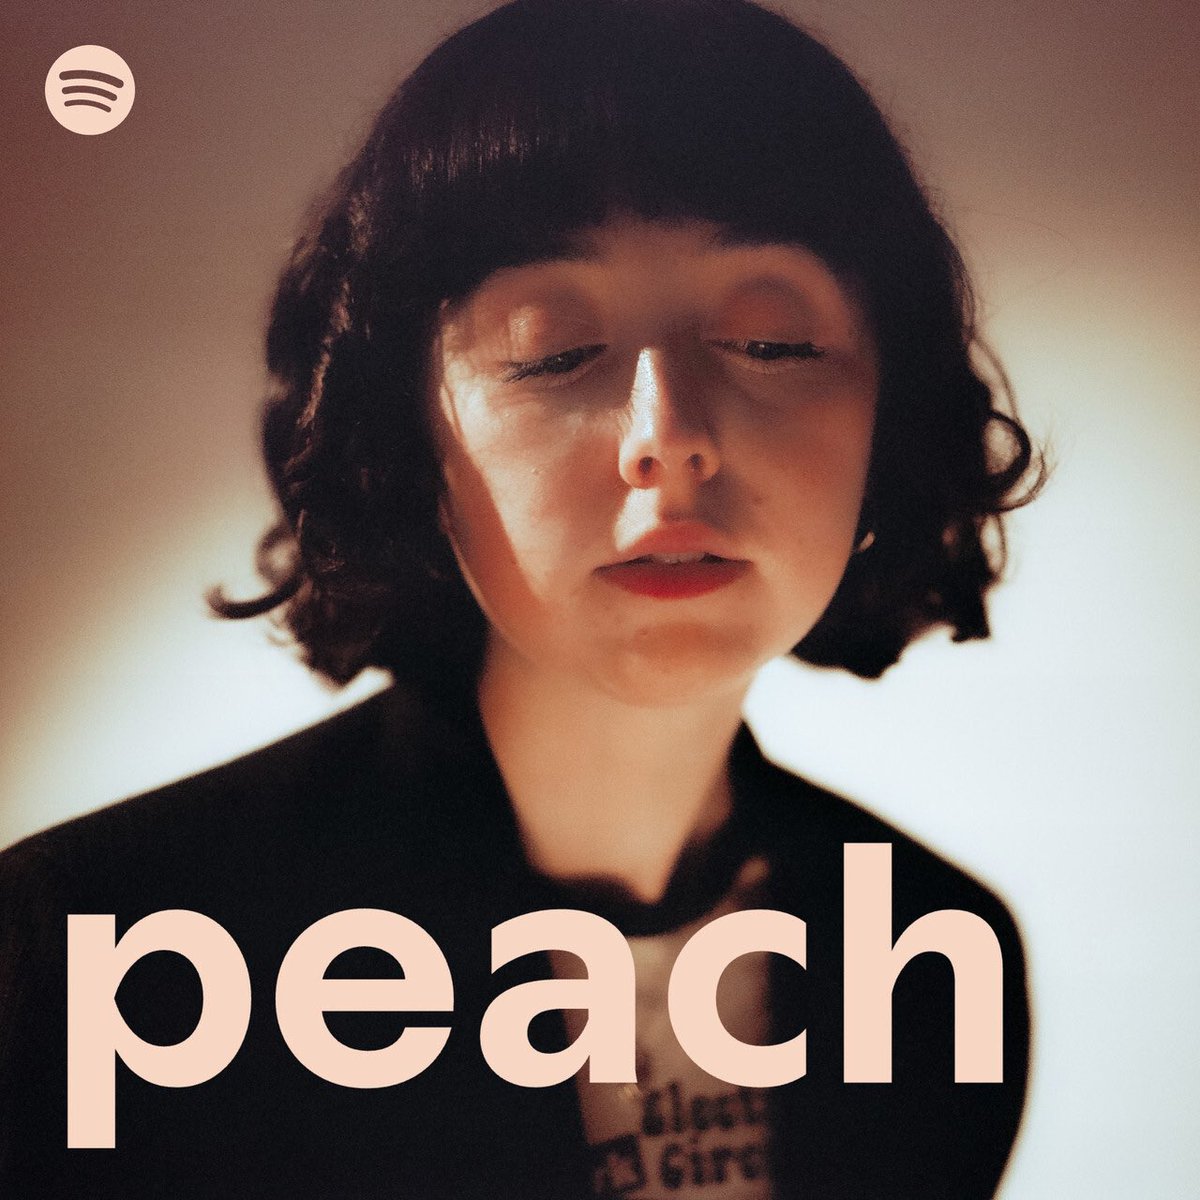 covergirl for peach eeeeeek thank you @SpotifyUK 🥹🫰🏻 i’m geeking open.spotify.com/playlist/37i9d…